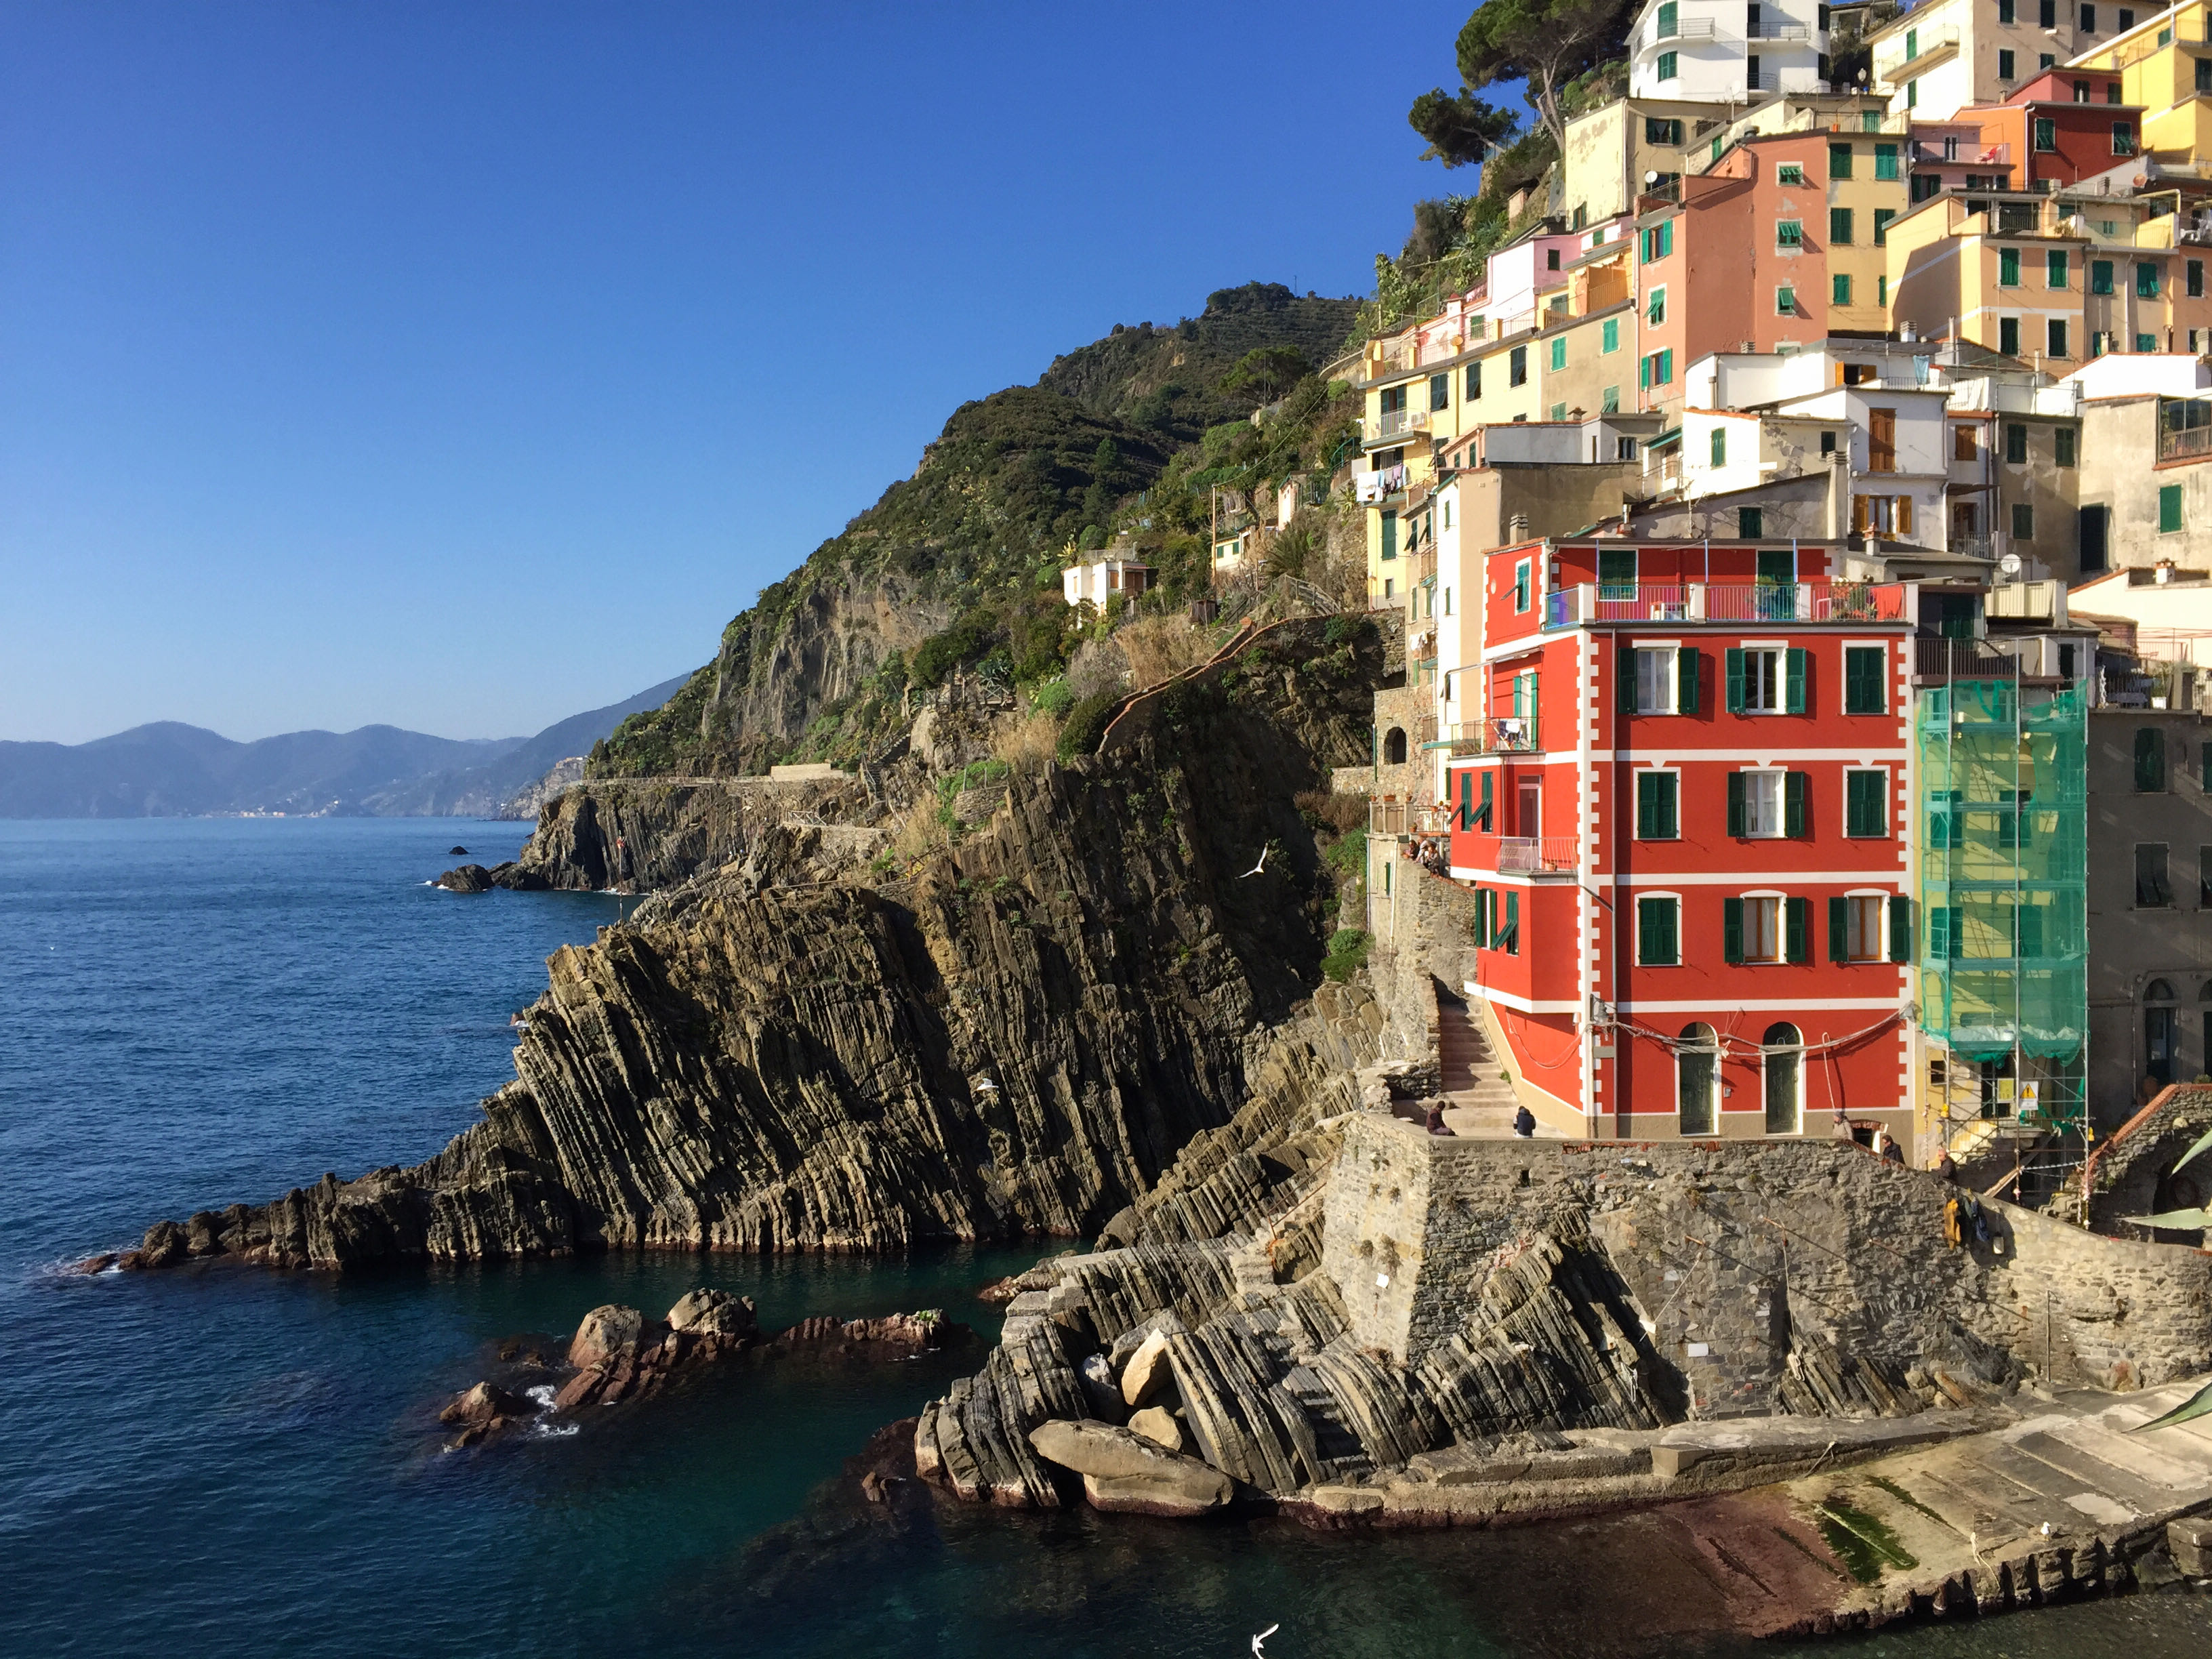 Travel Talk Tuesday: June 8, 2021 – The Cinque Terre